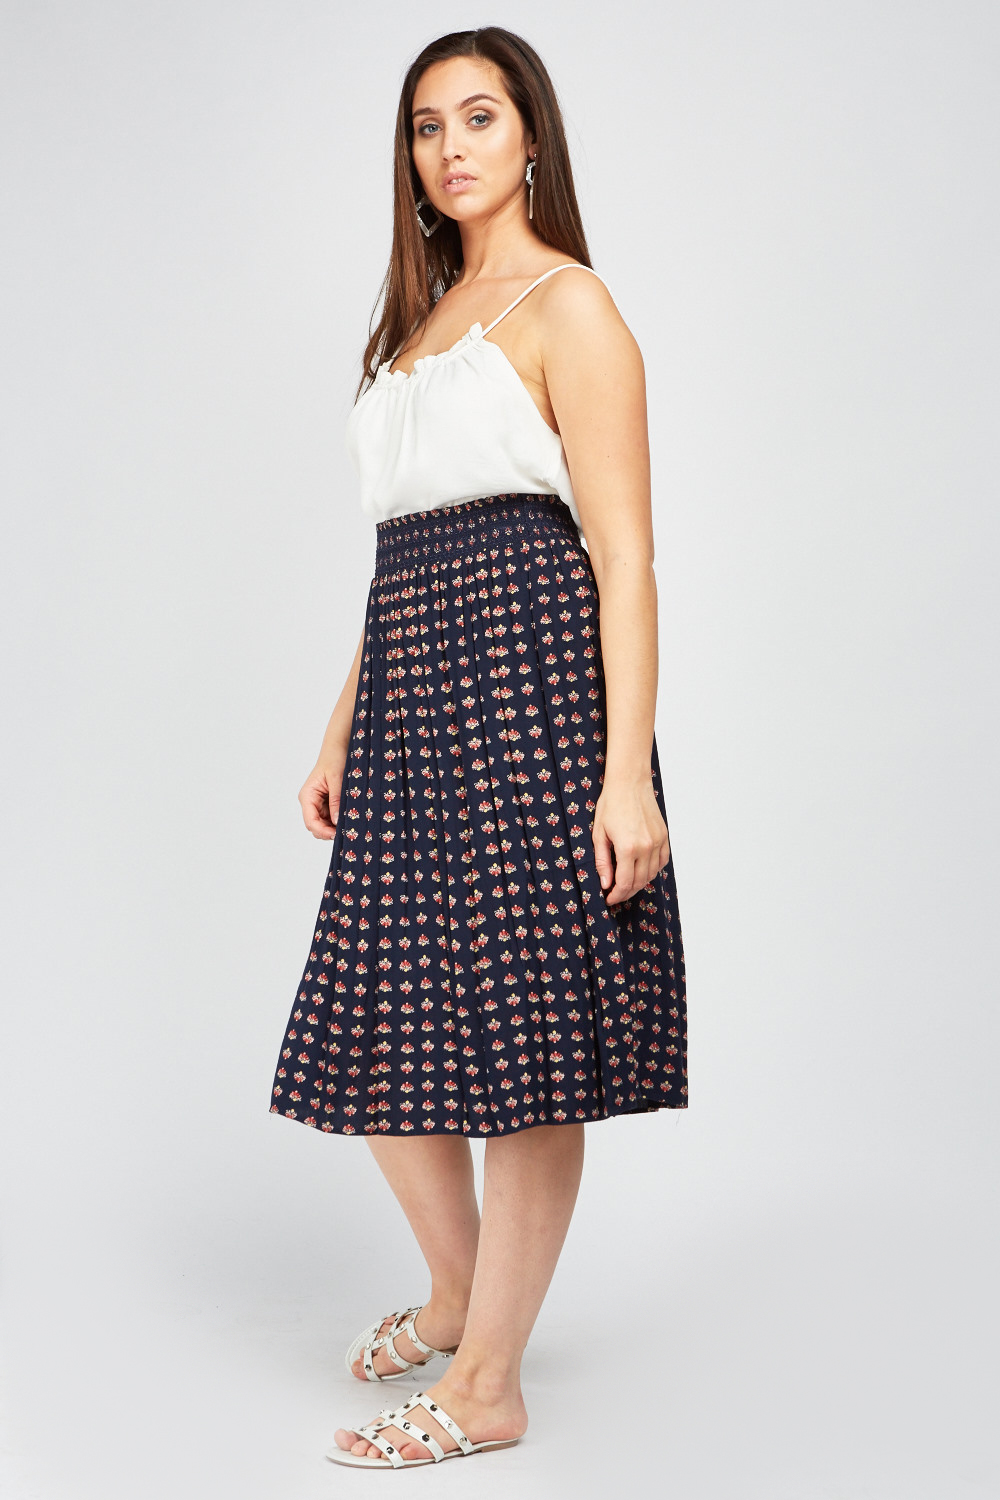 Printed Mid Length Skirt - Just $3